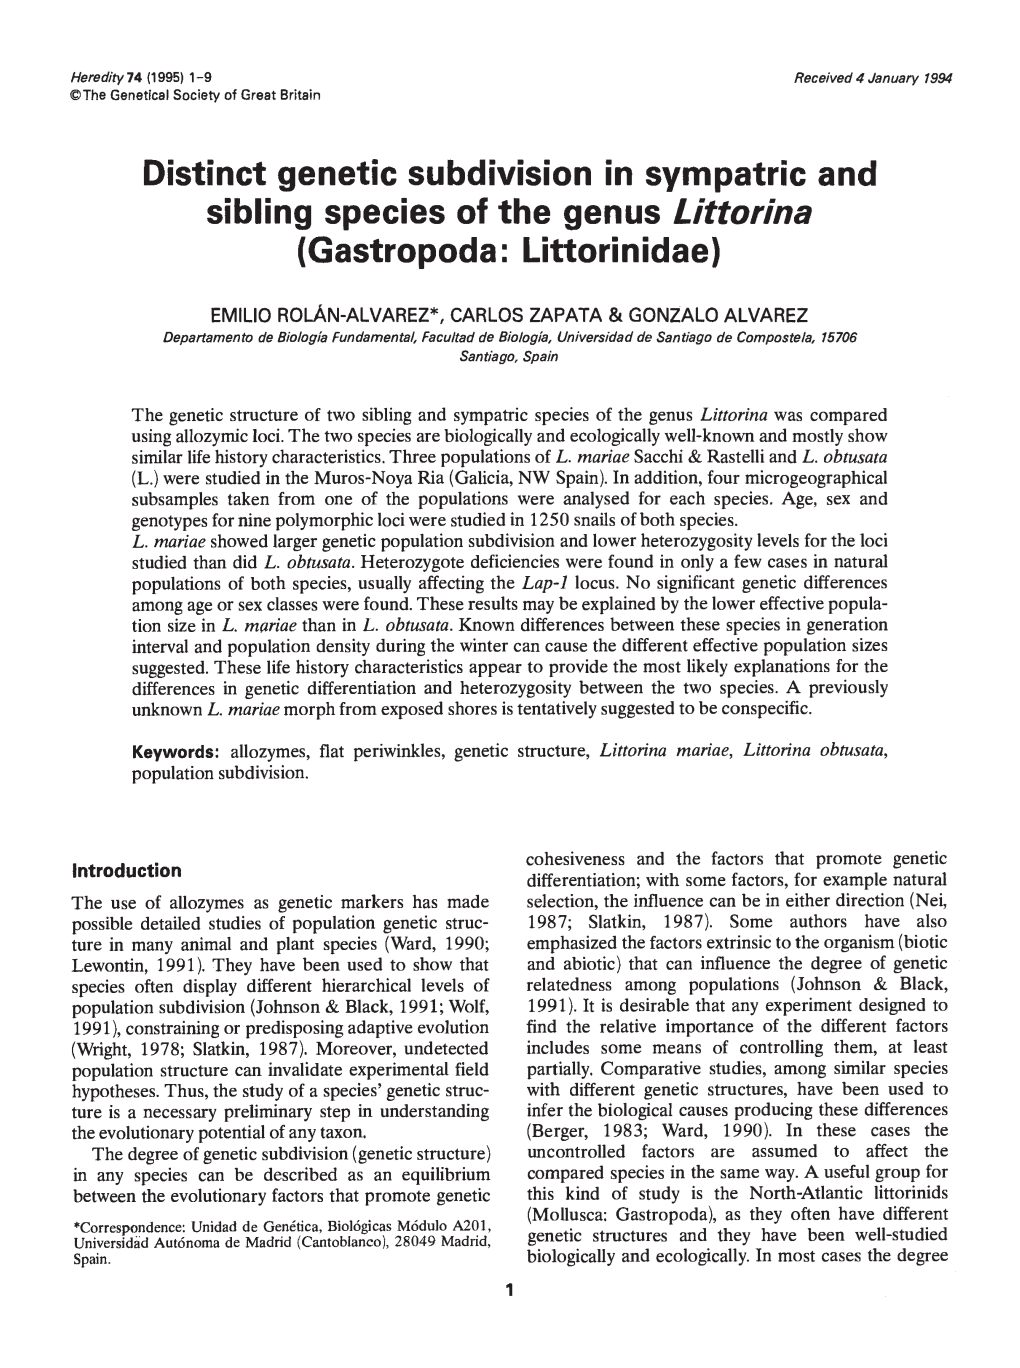 Distinct Genetic Subdivision in Sympatric and Sibling Species of the Genus Littorina (Gastropoda: Littorinidae)